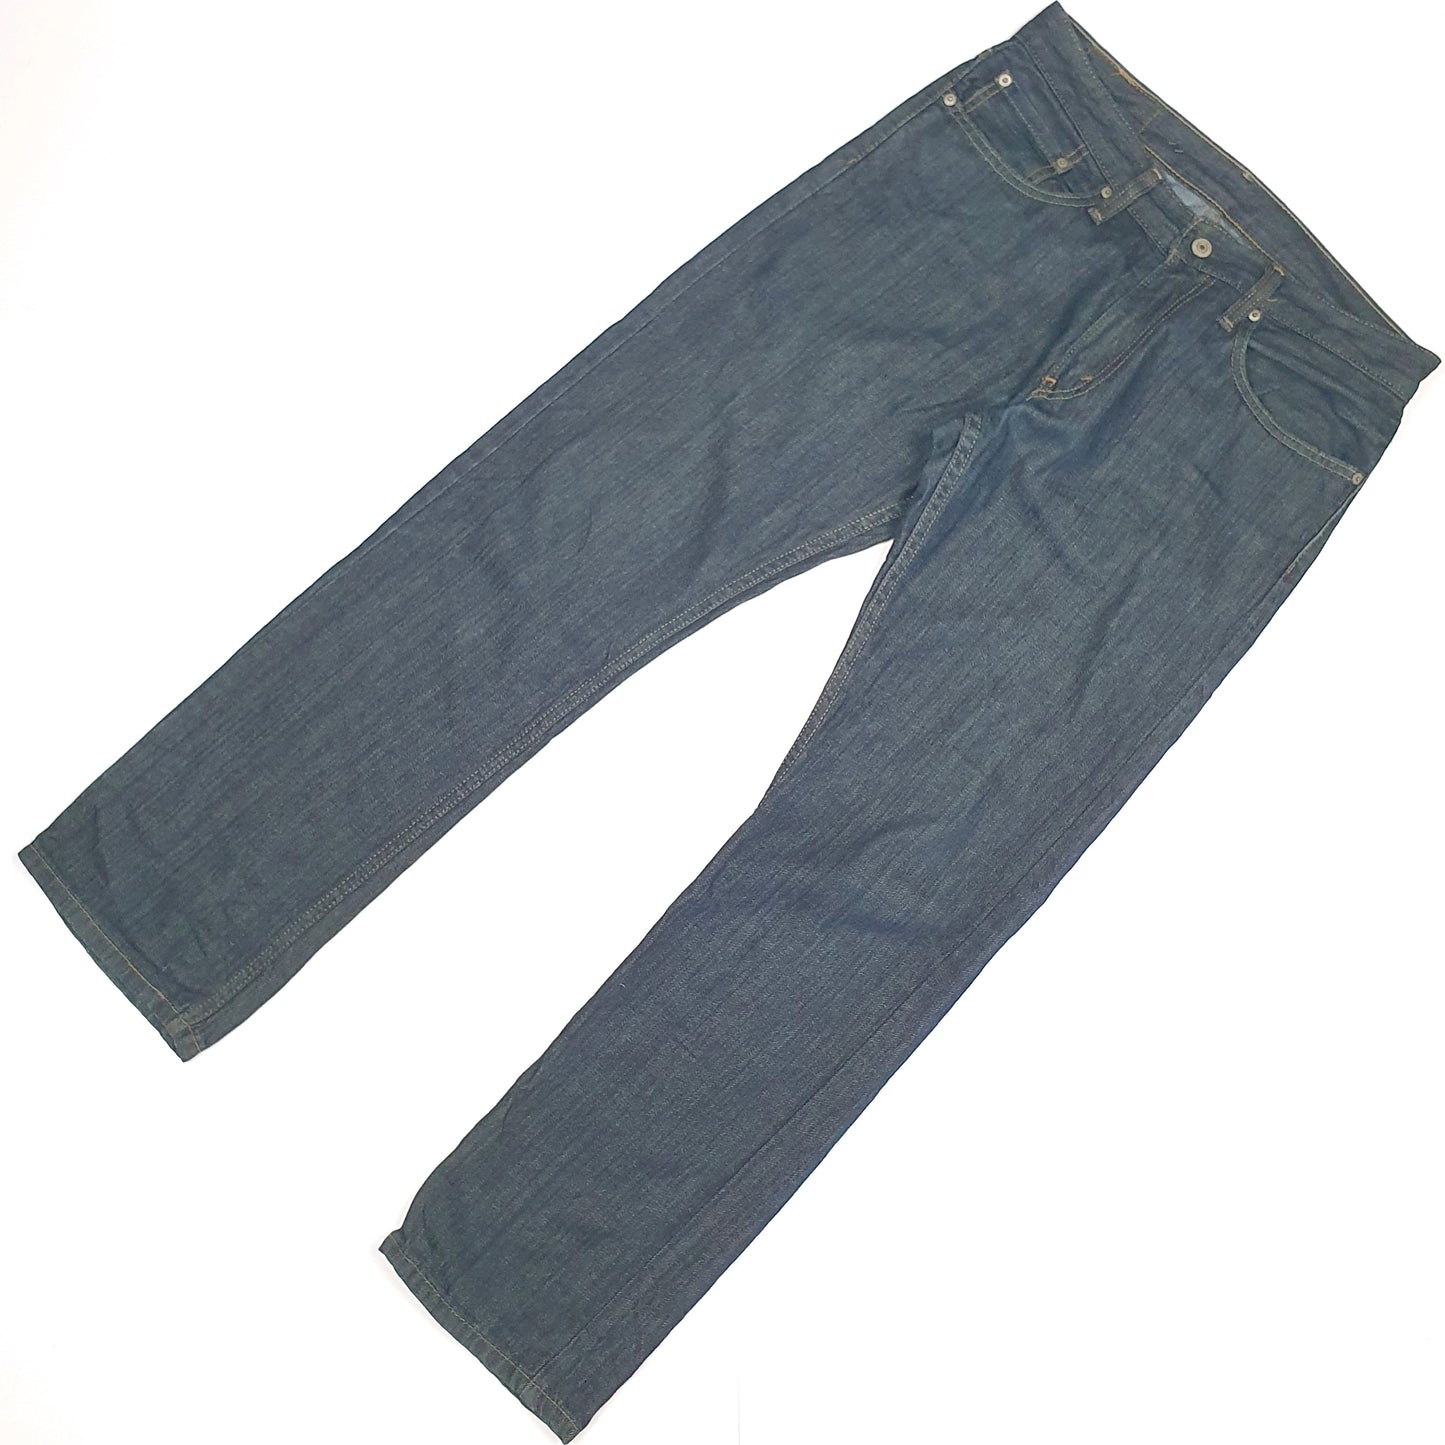 Levis 514 Straight Fit Jeans W34 L33